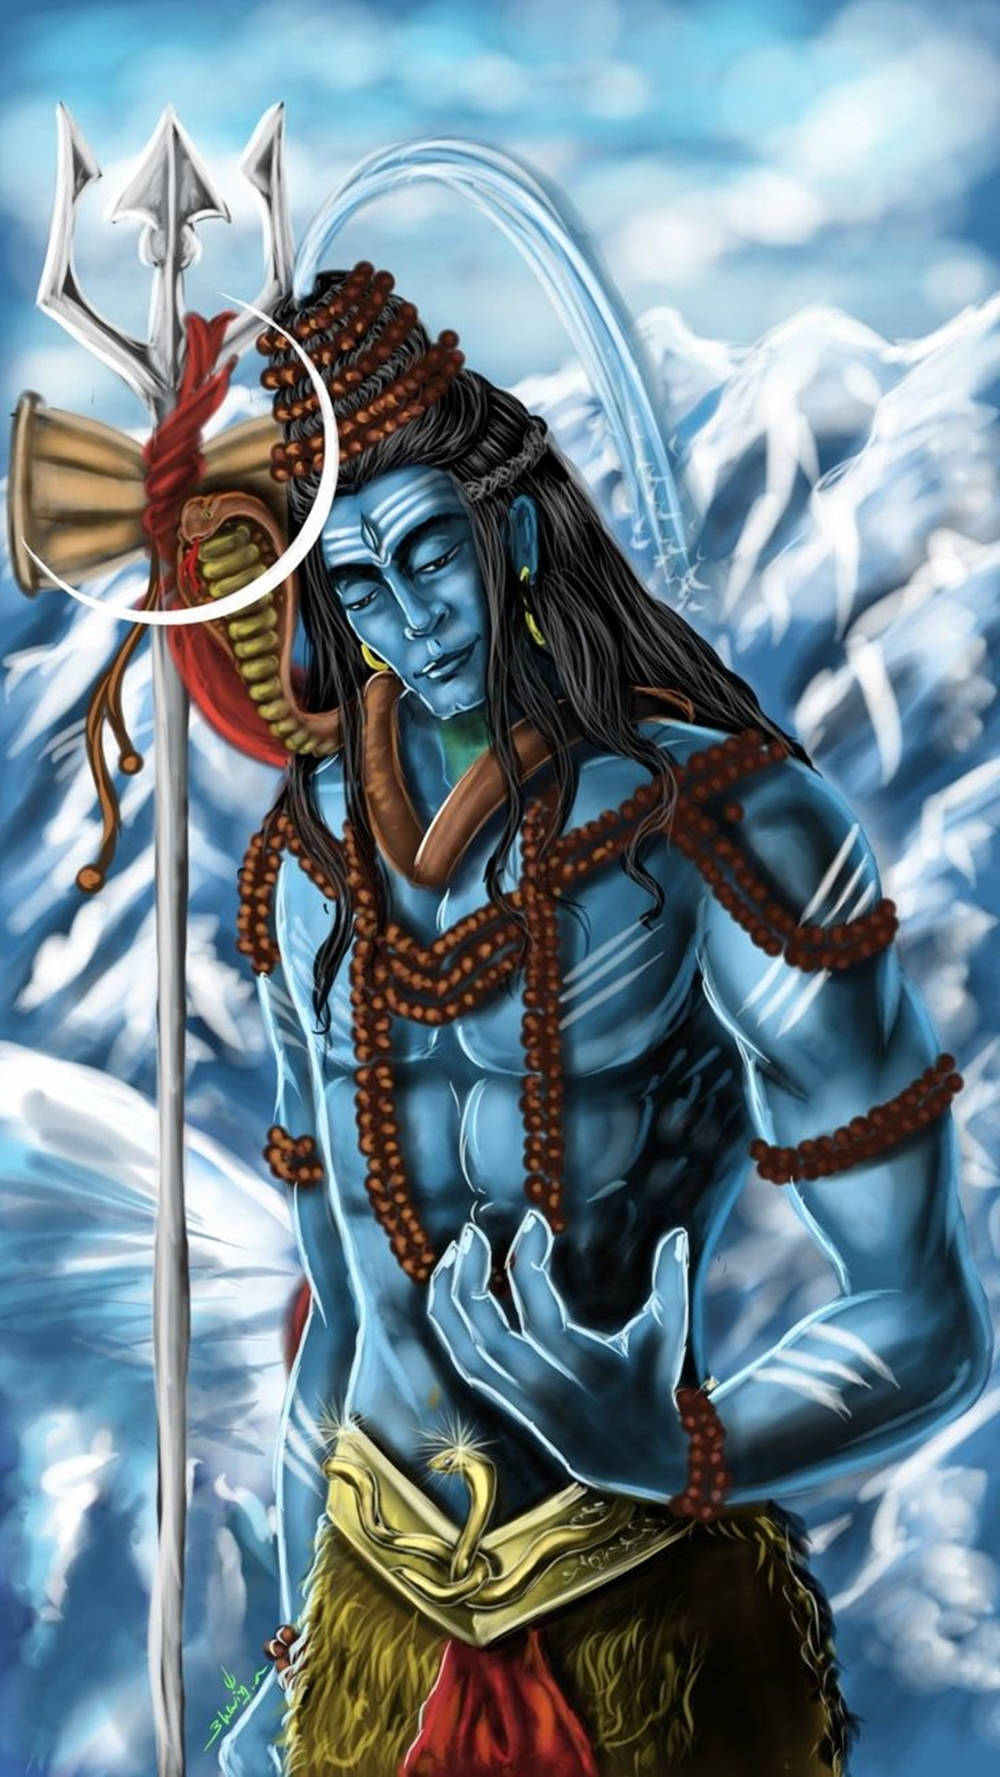 Divine Fury - Angry Vishnu Standing On Snowy Mountain Summit Background